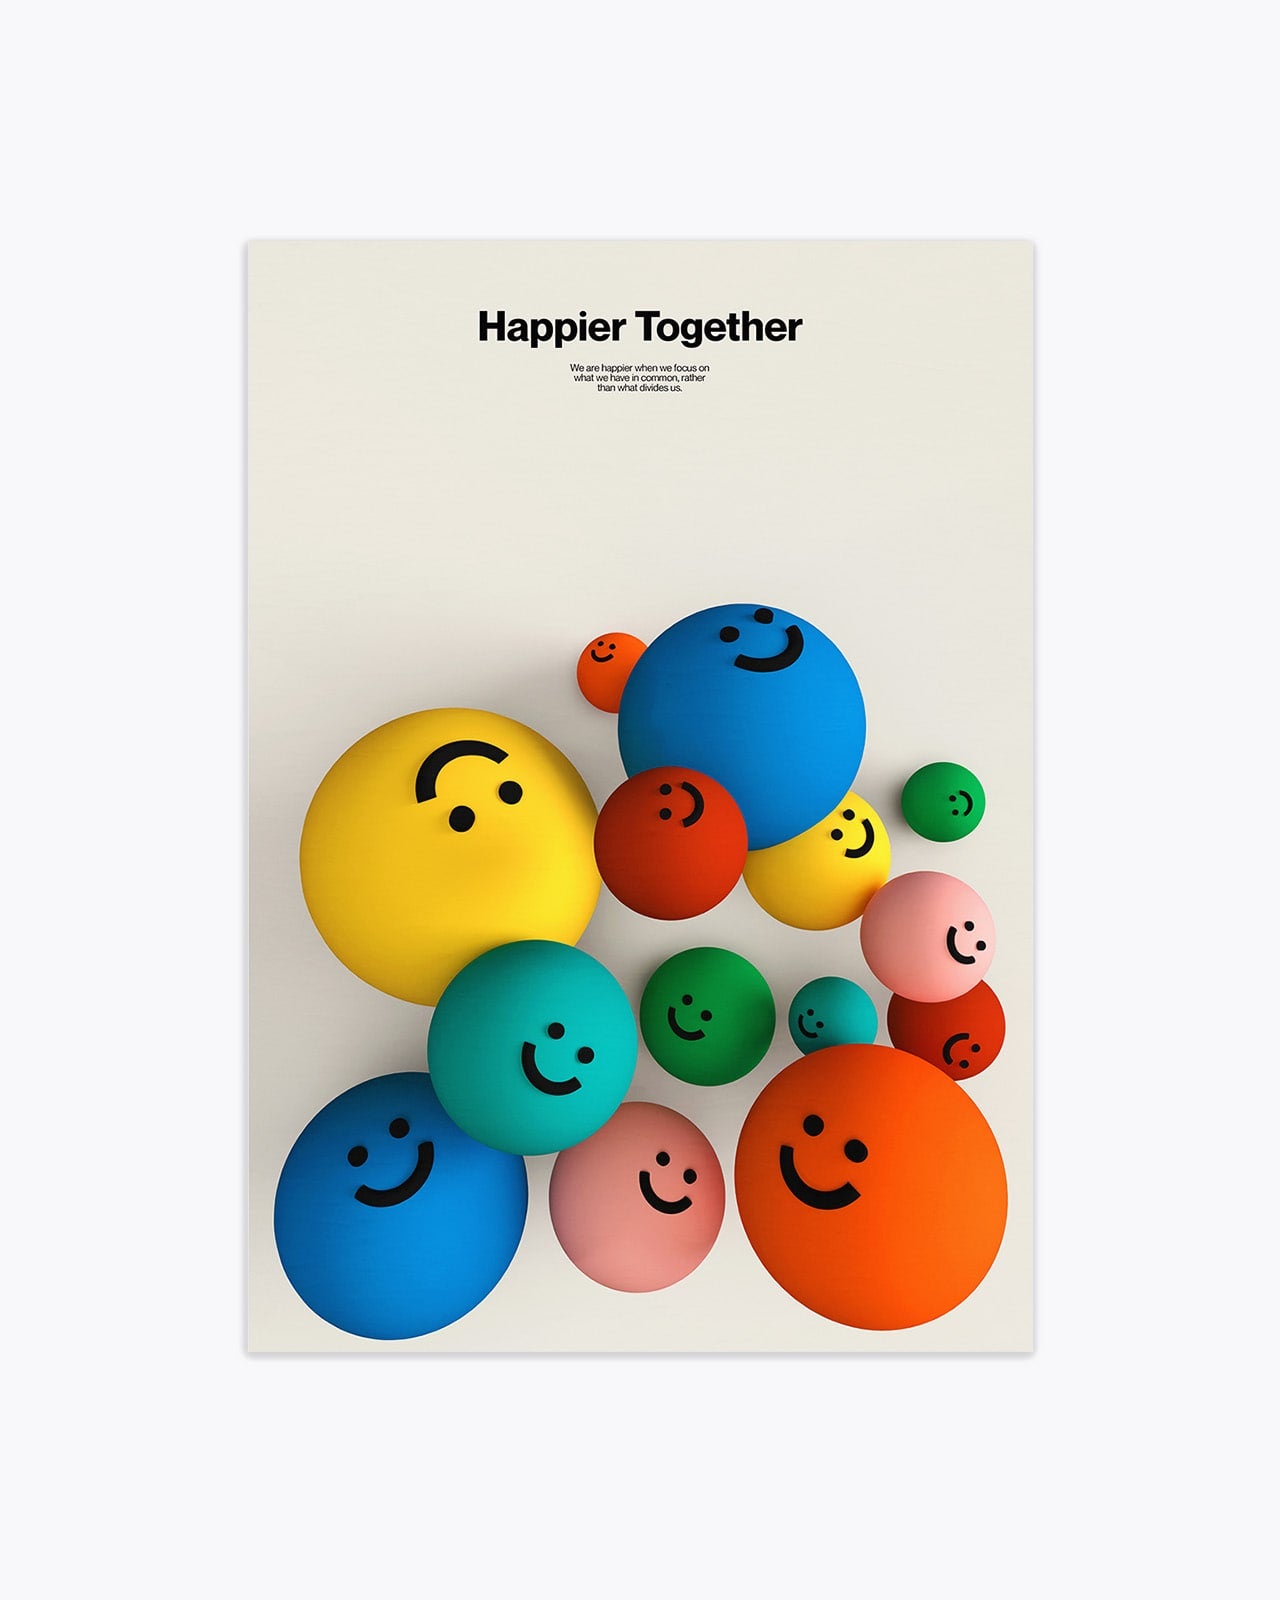 Happier Together